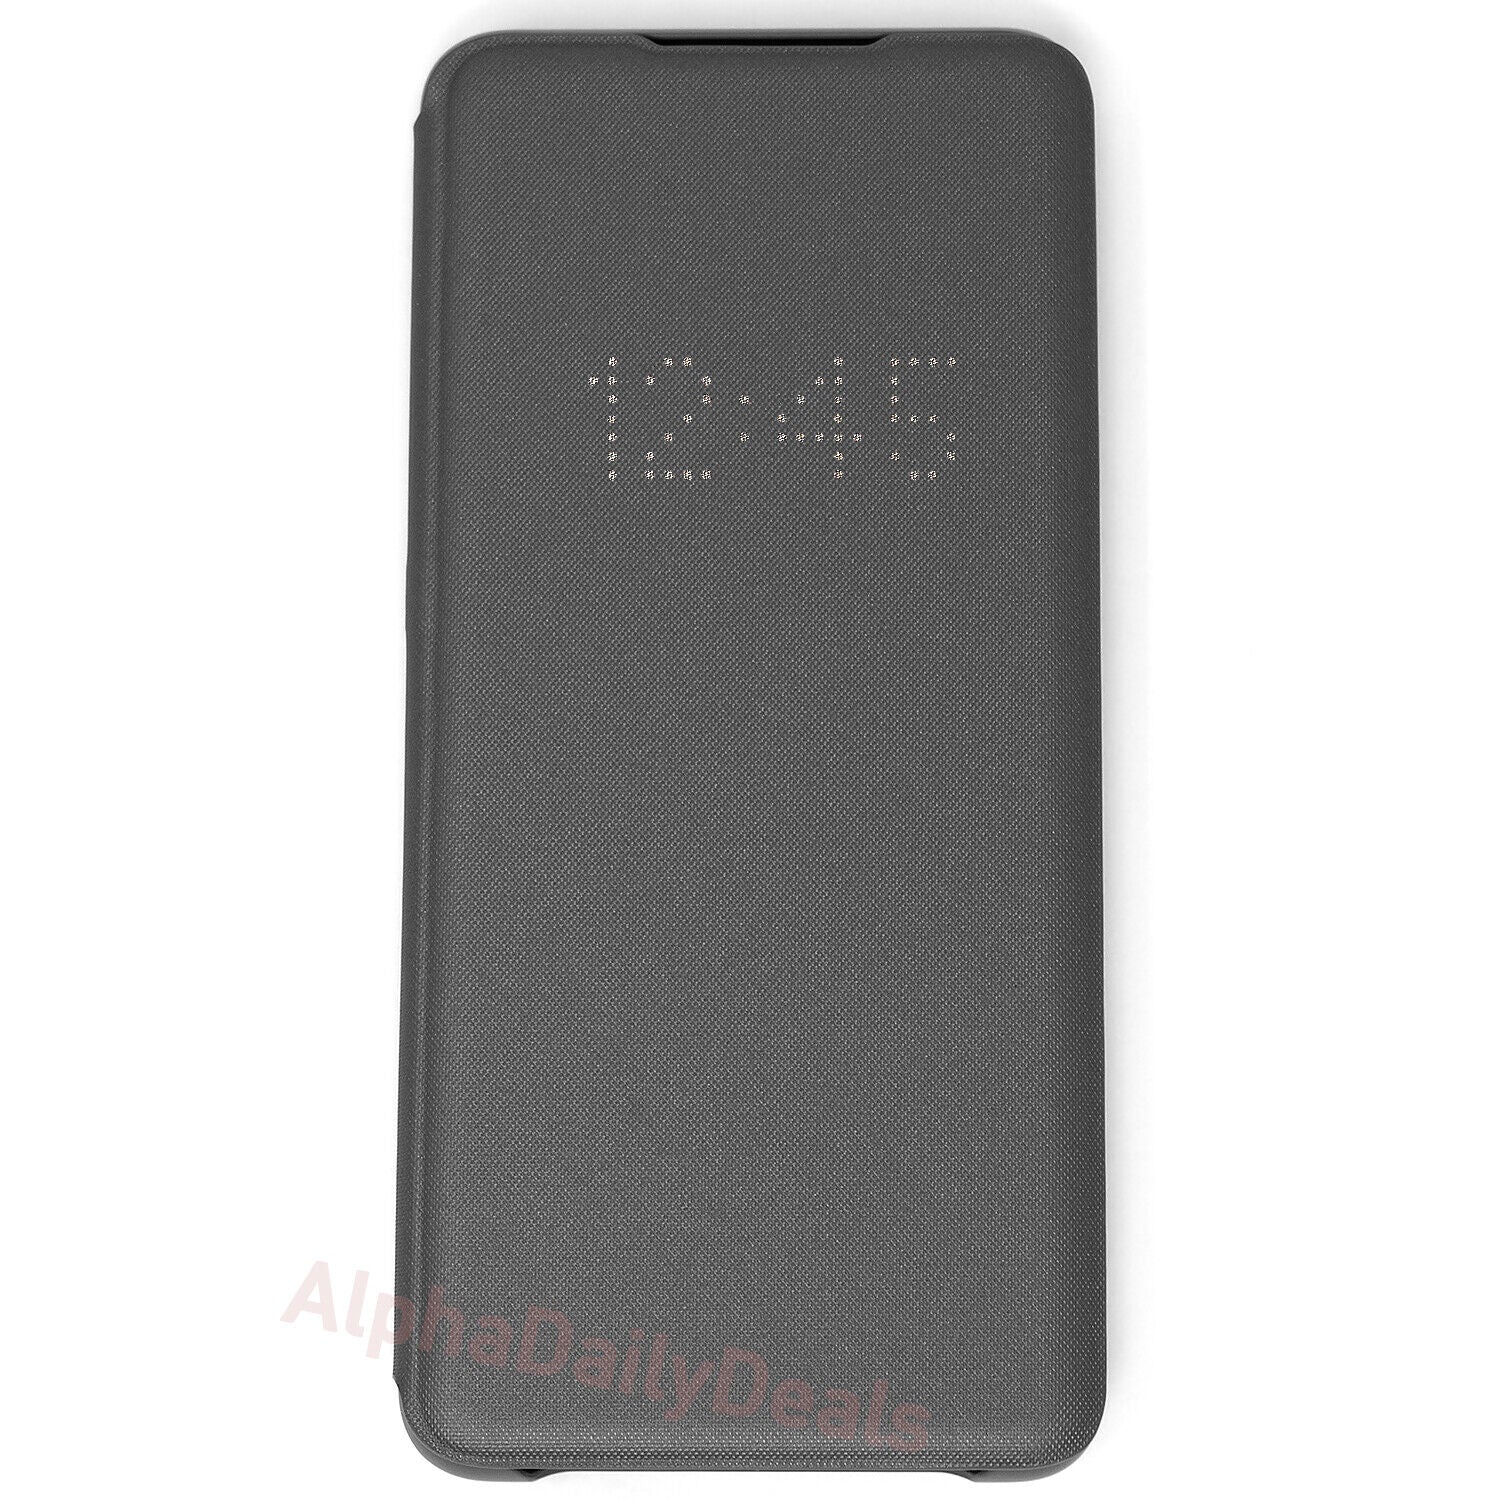 Genuine OEM Samsung Galaxy S20 5G LED Wallet Case Folio Cover Gray